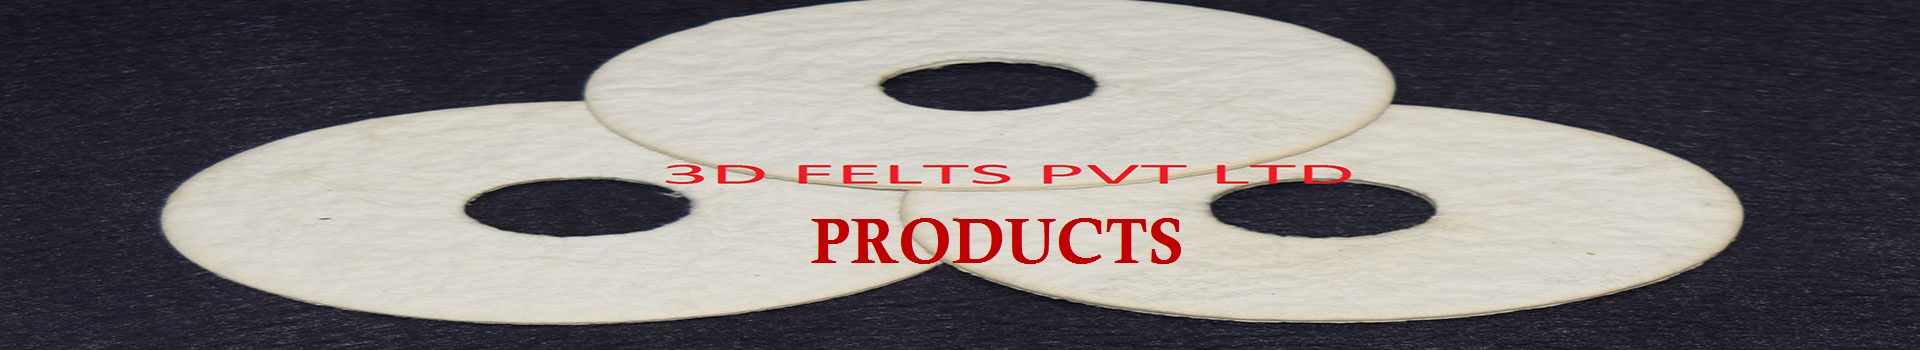 Cellulose Paper Filter Pads Manufacturer